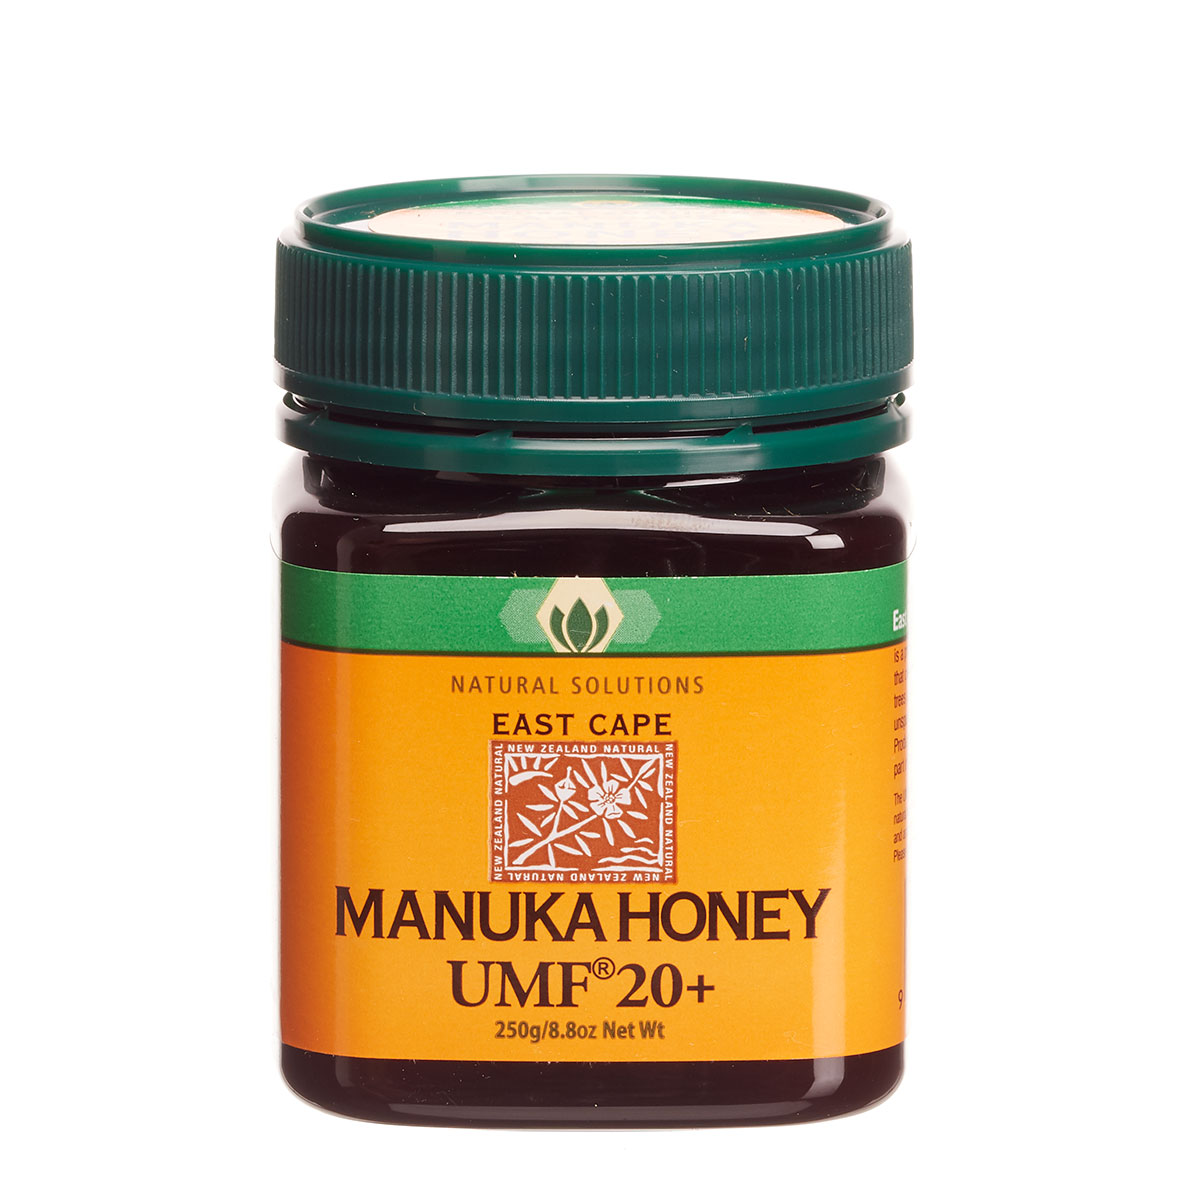 Australia tries to cash in on Manuka honey